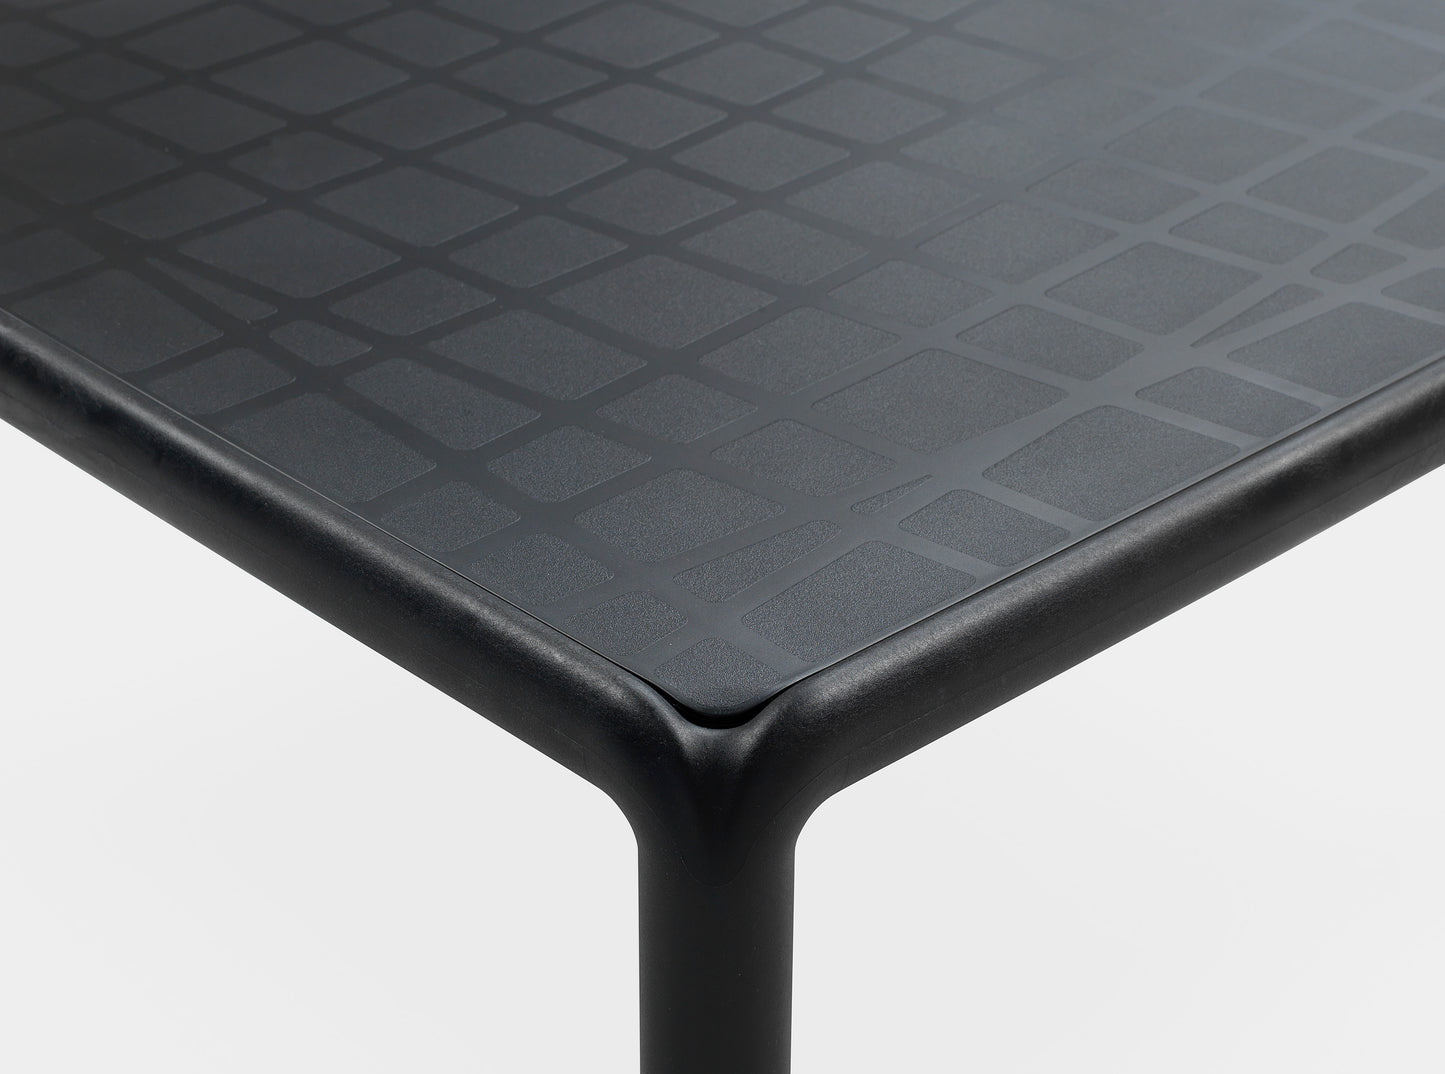 Komodo coffee table in fiberglass resin - Nardi